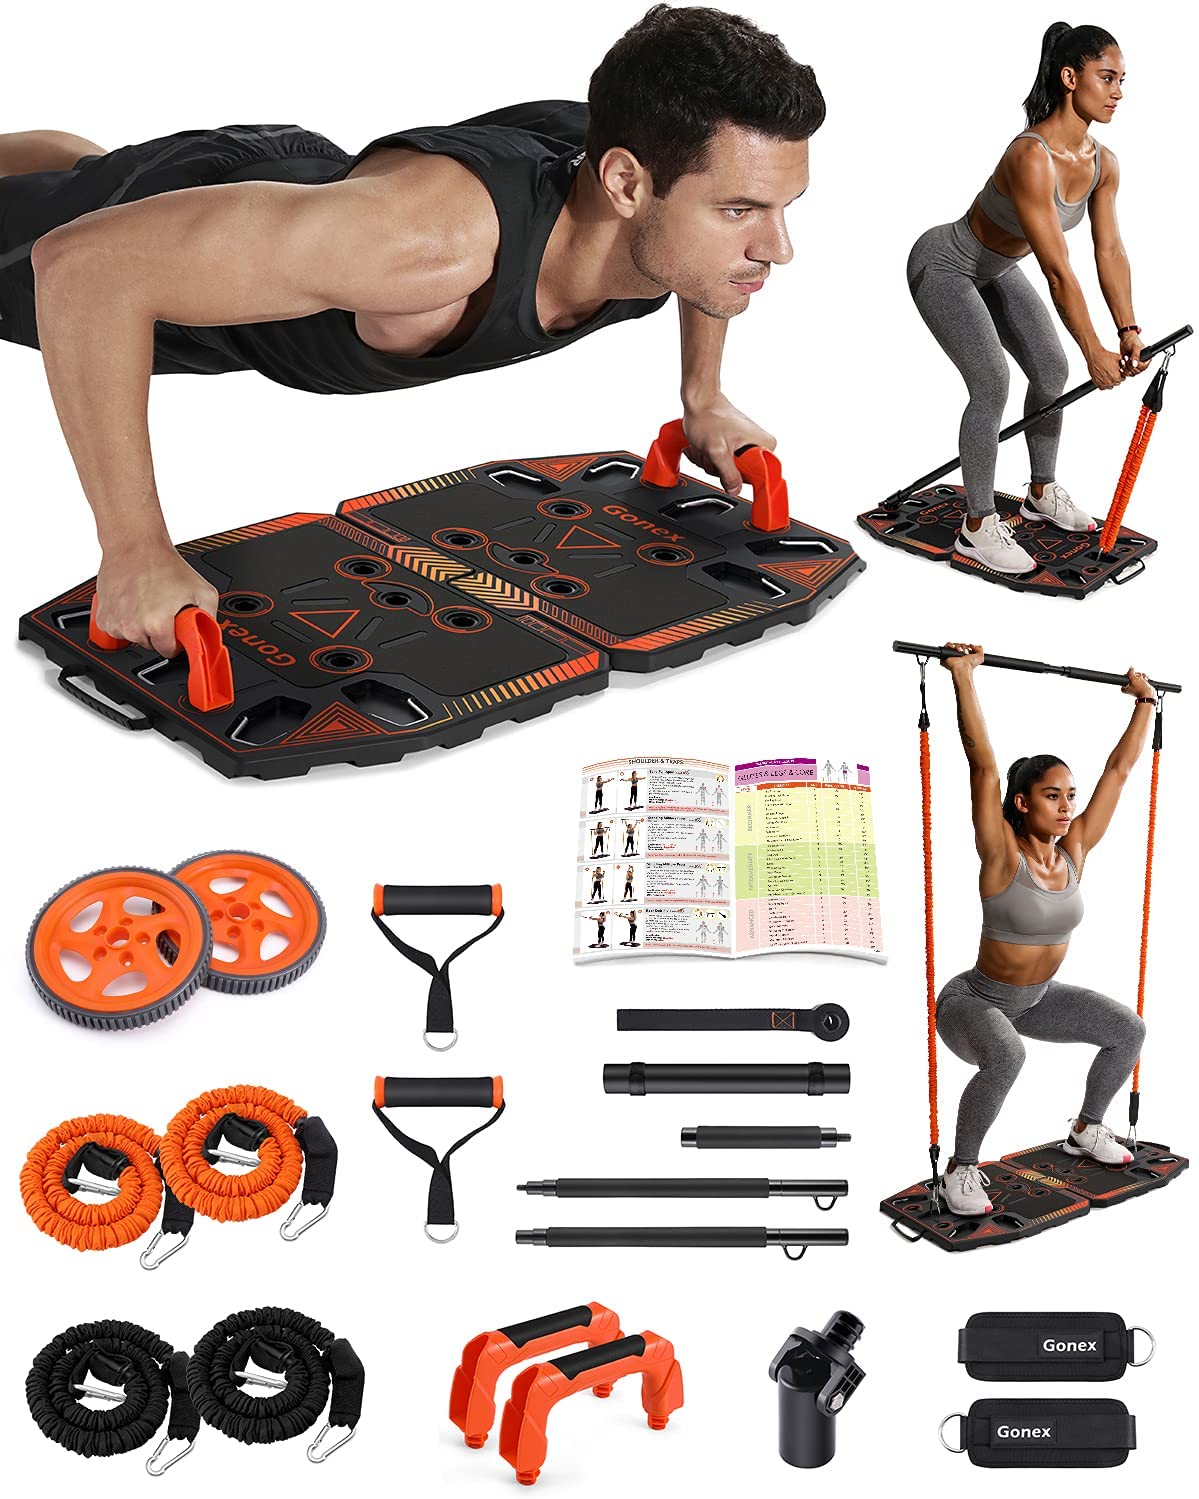 Gonex Portable Home Gym Workout System